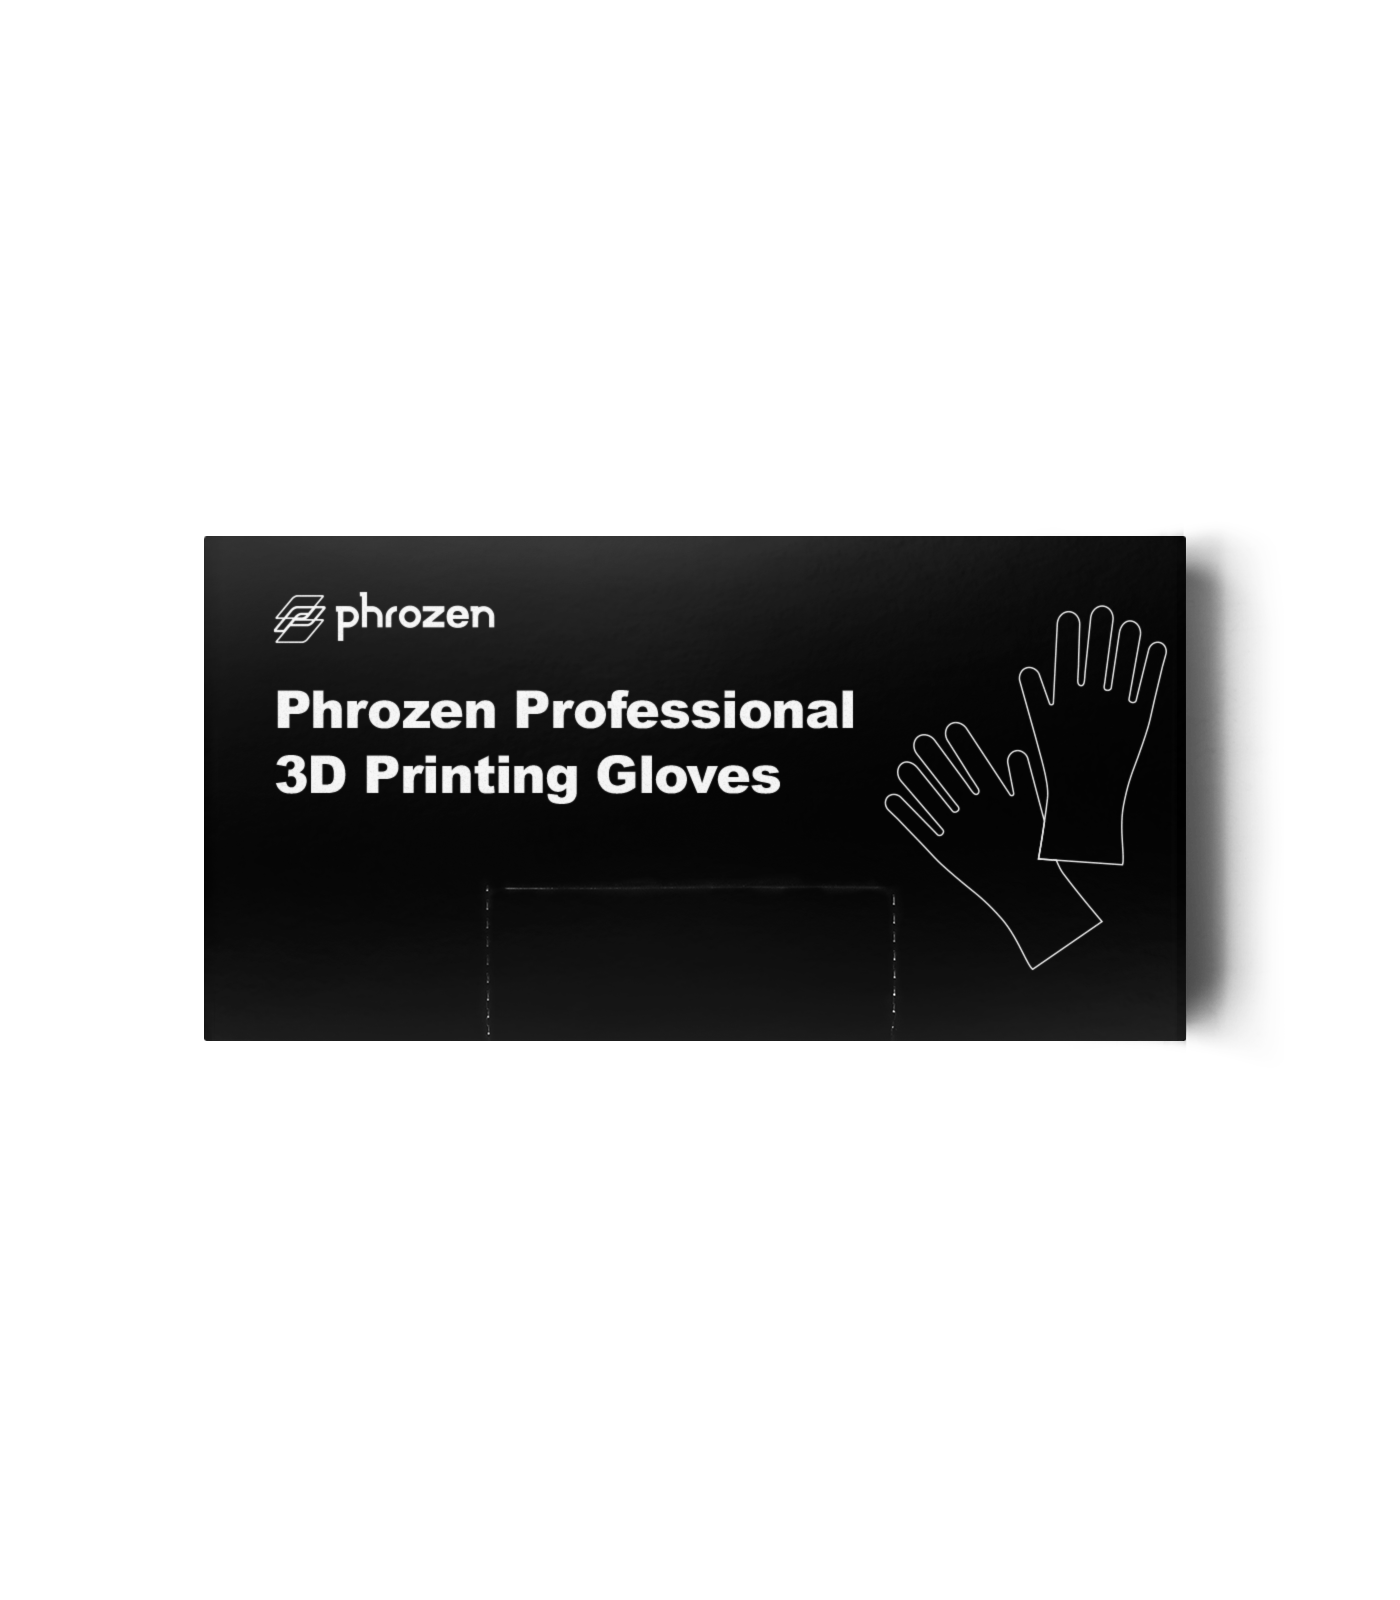 Phrozen Professional 3D Printing Gloves